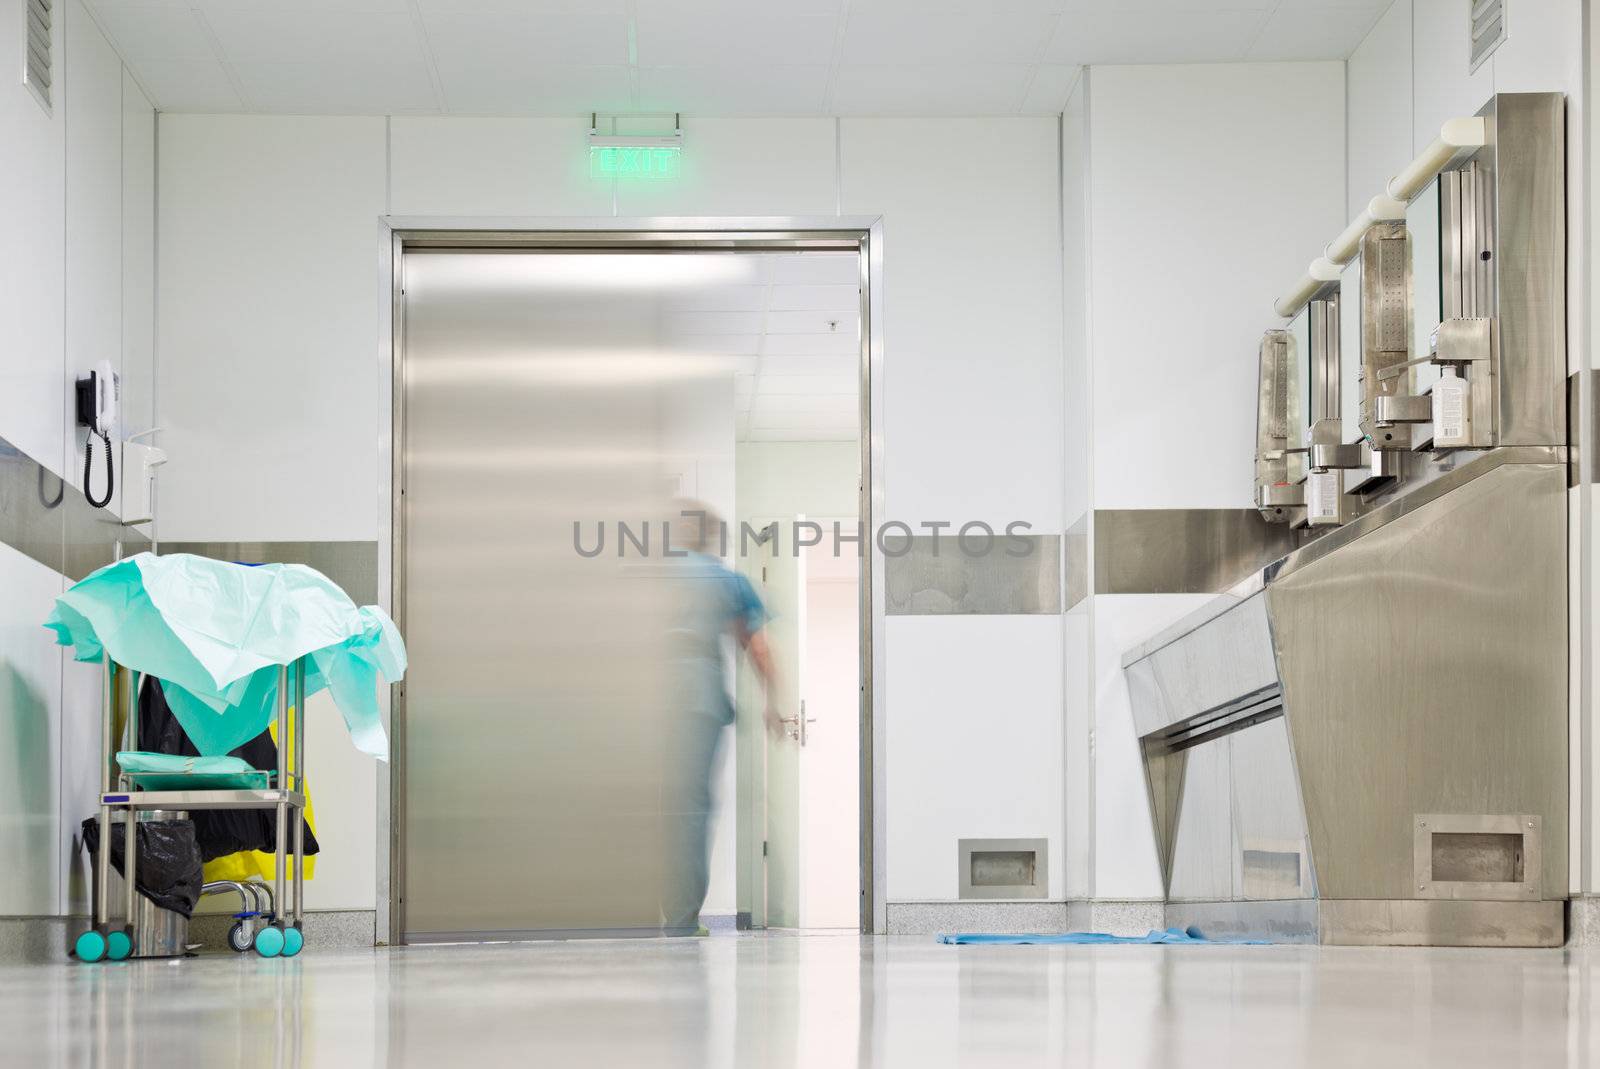 Blurred figure exiting hospital door by vilevi